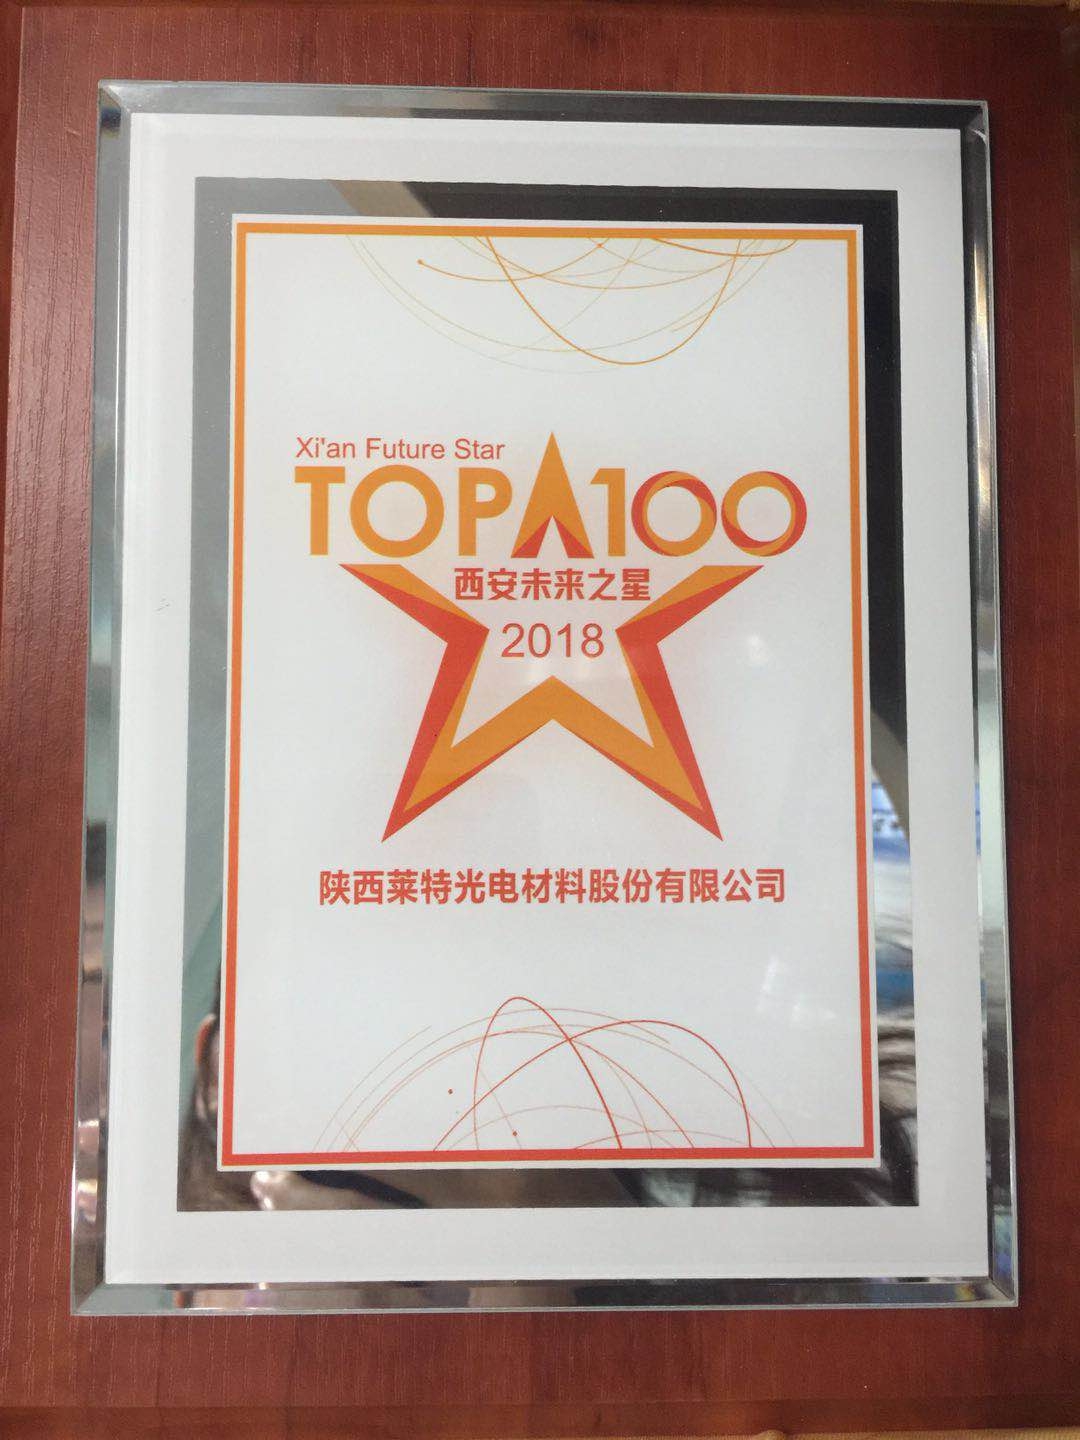 Xi'an Future Star TOP100